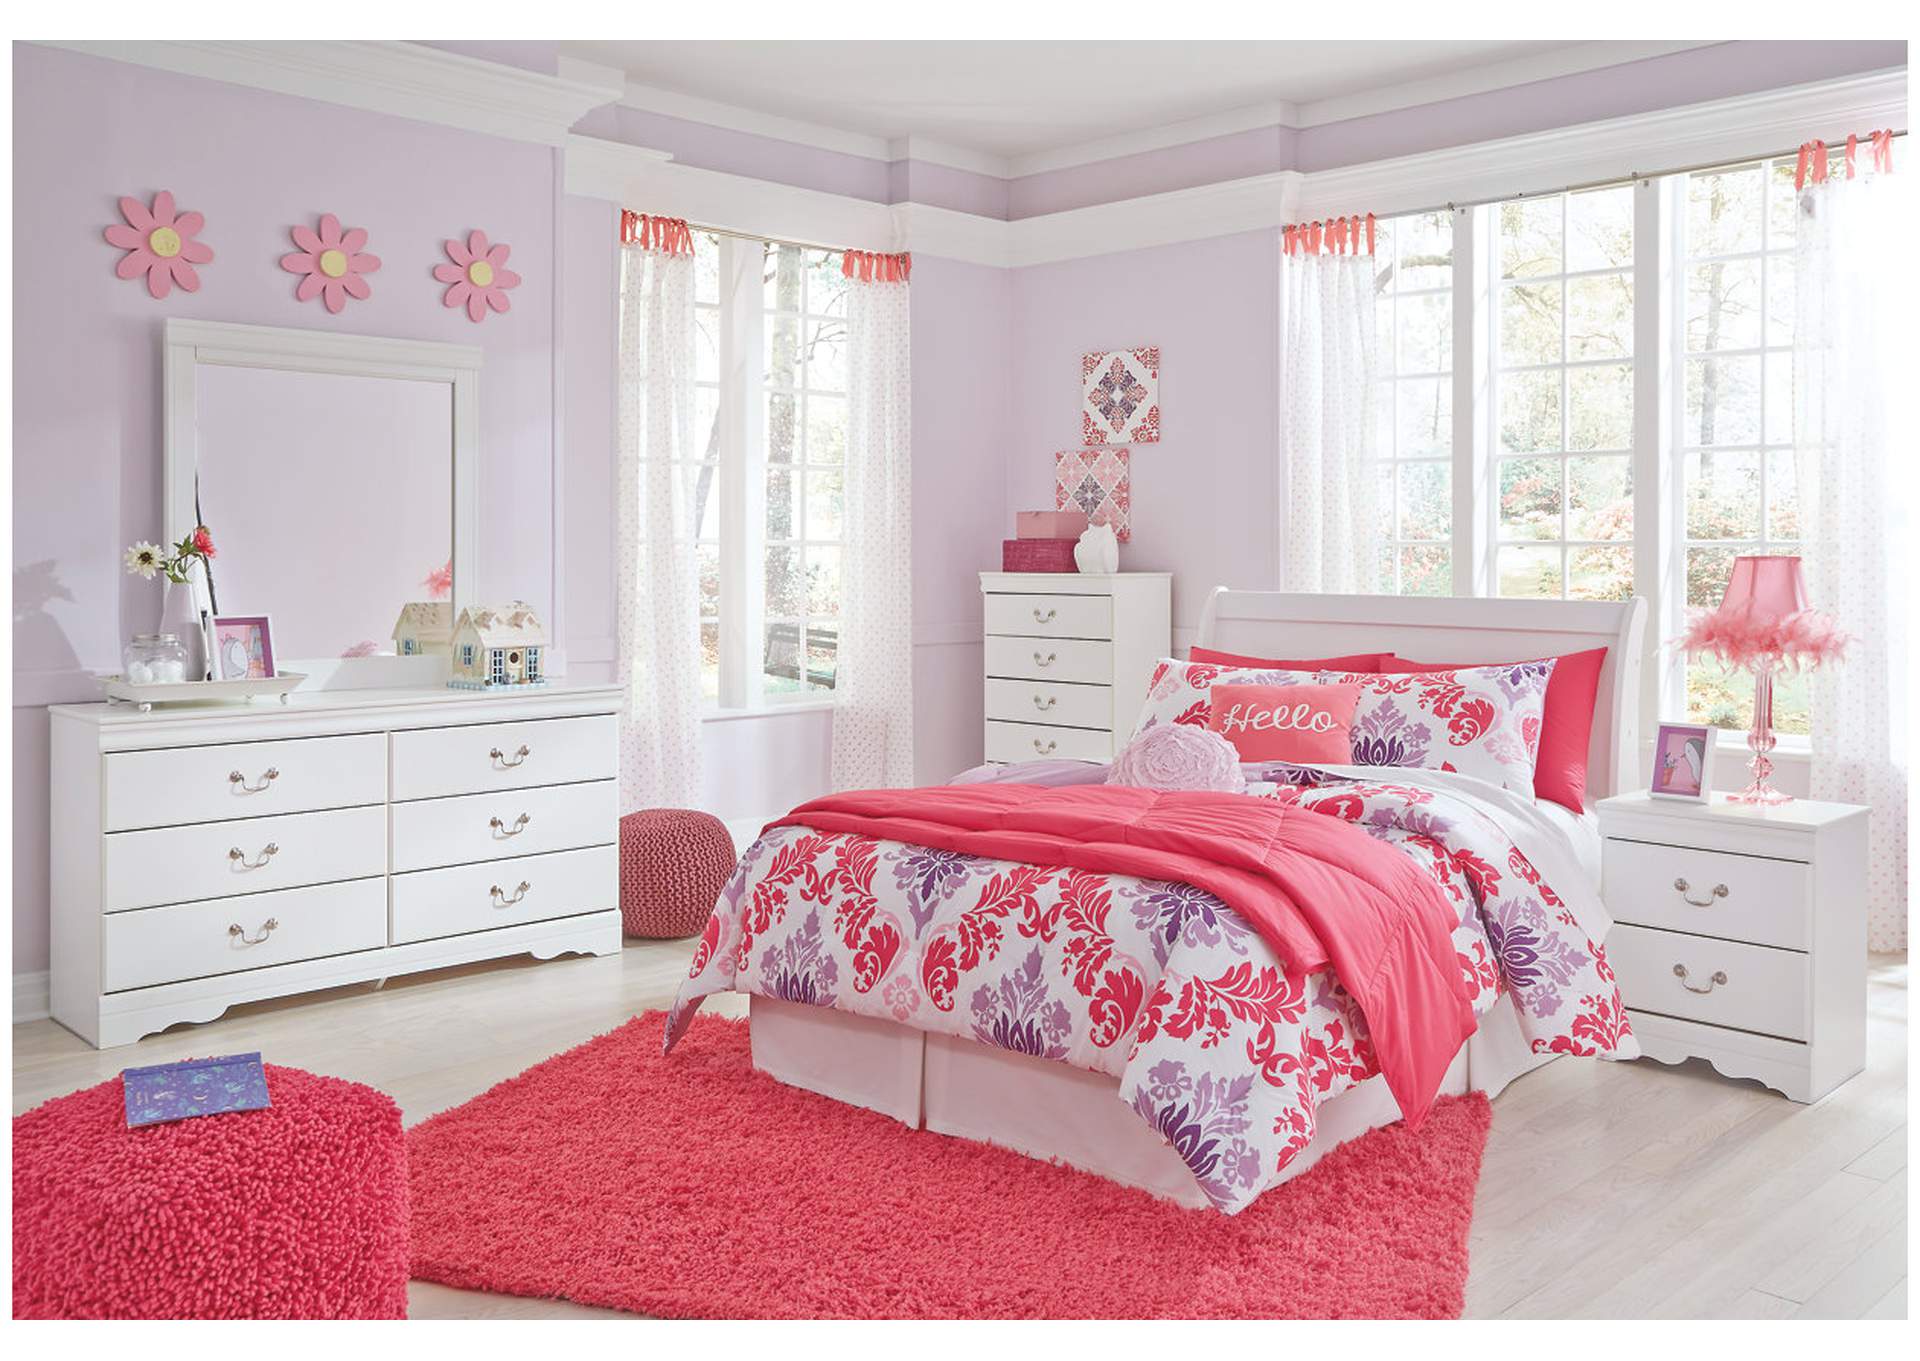 Anarasia Full Sleigh Headboard Bed with Mirrored Dresser,Signature Design By Ashley